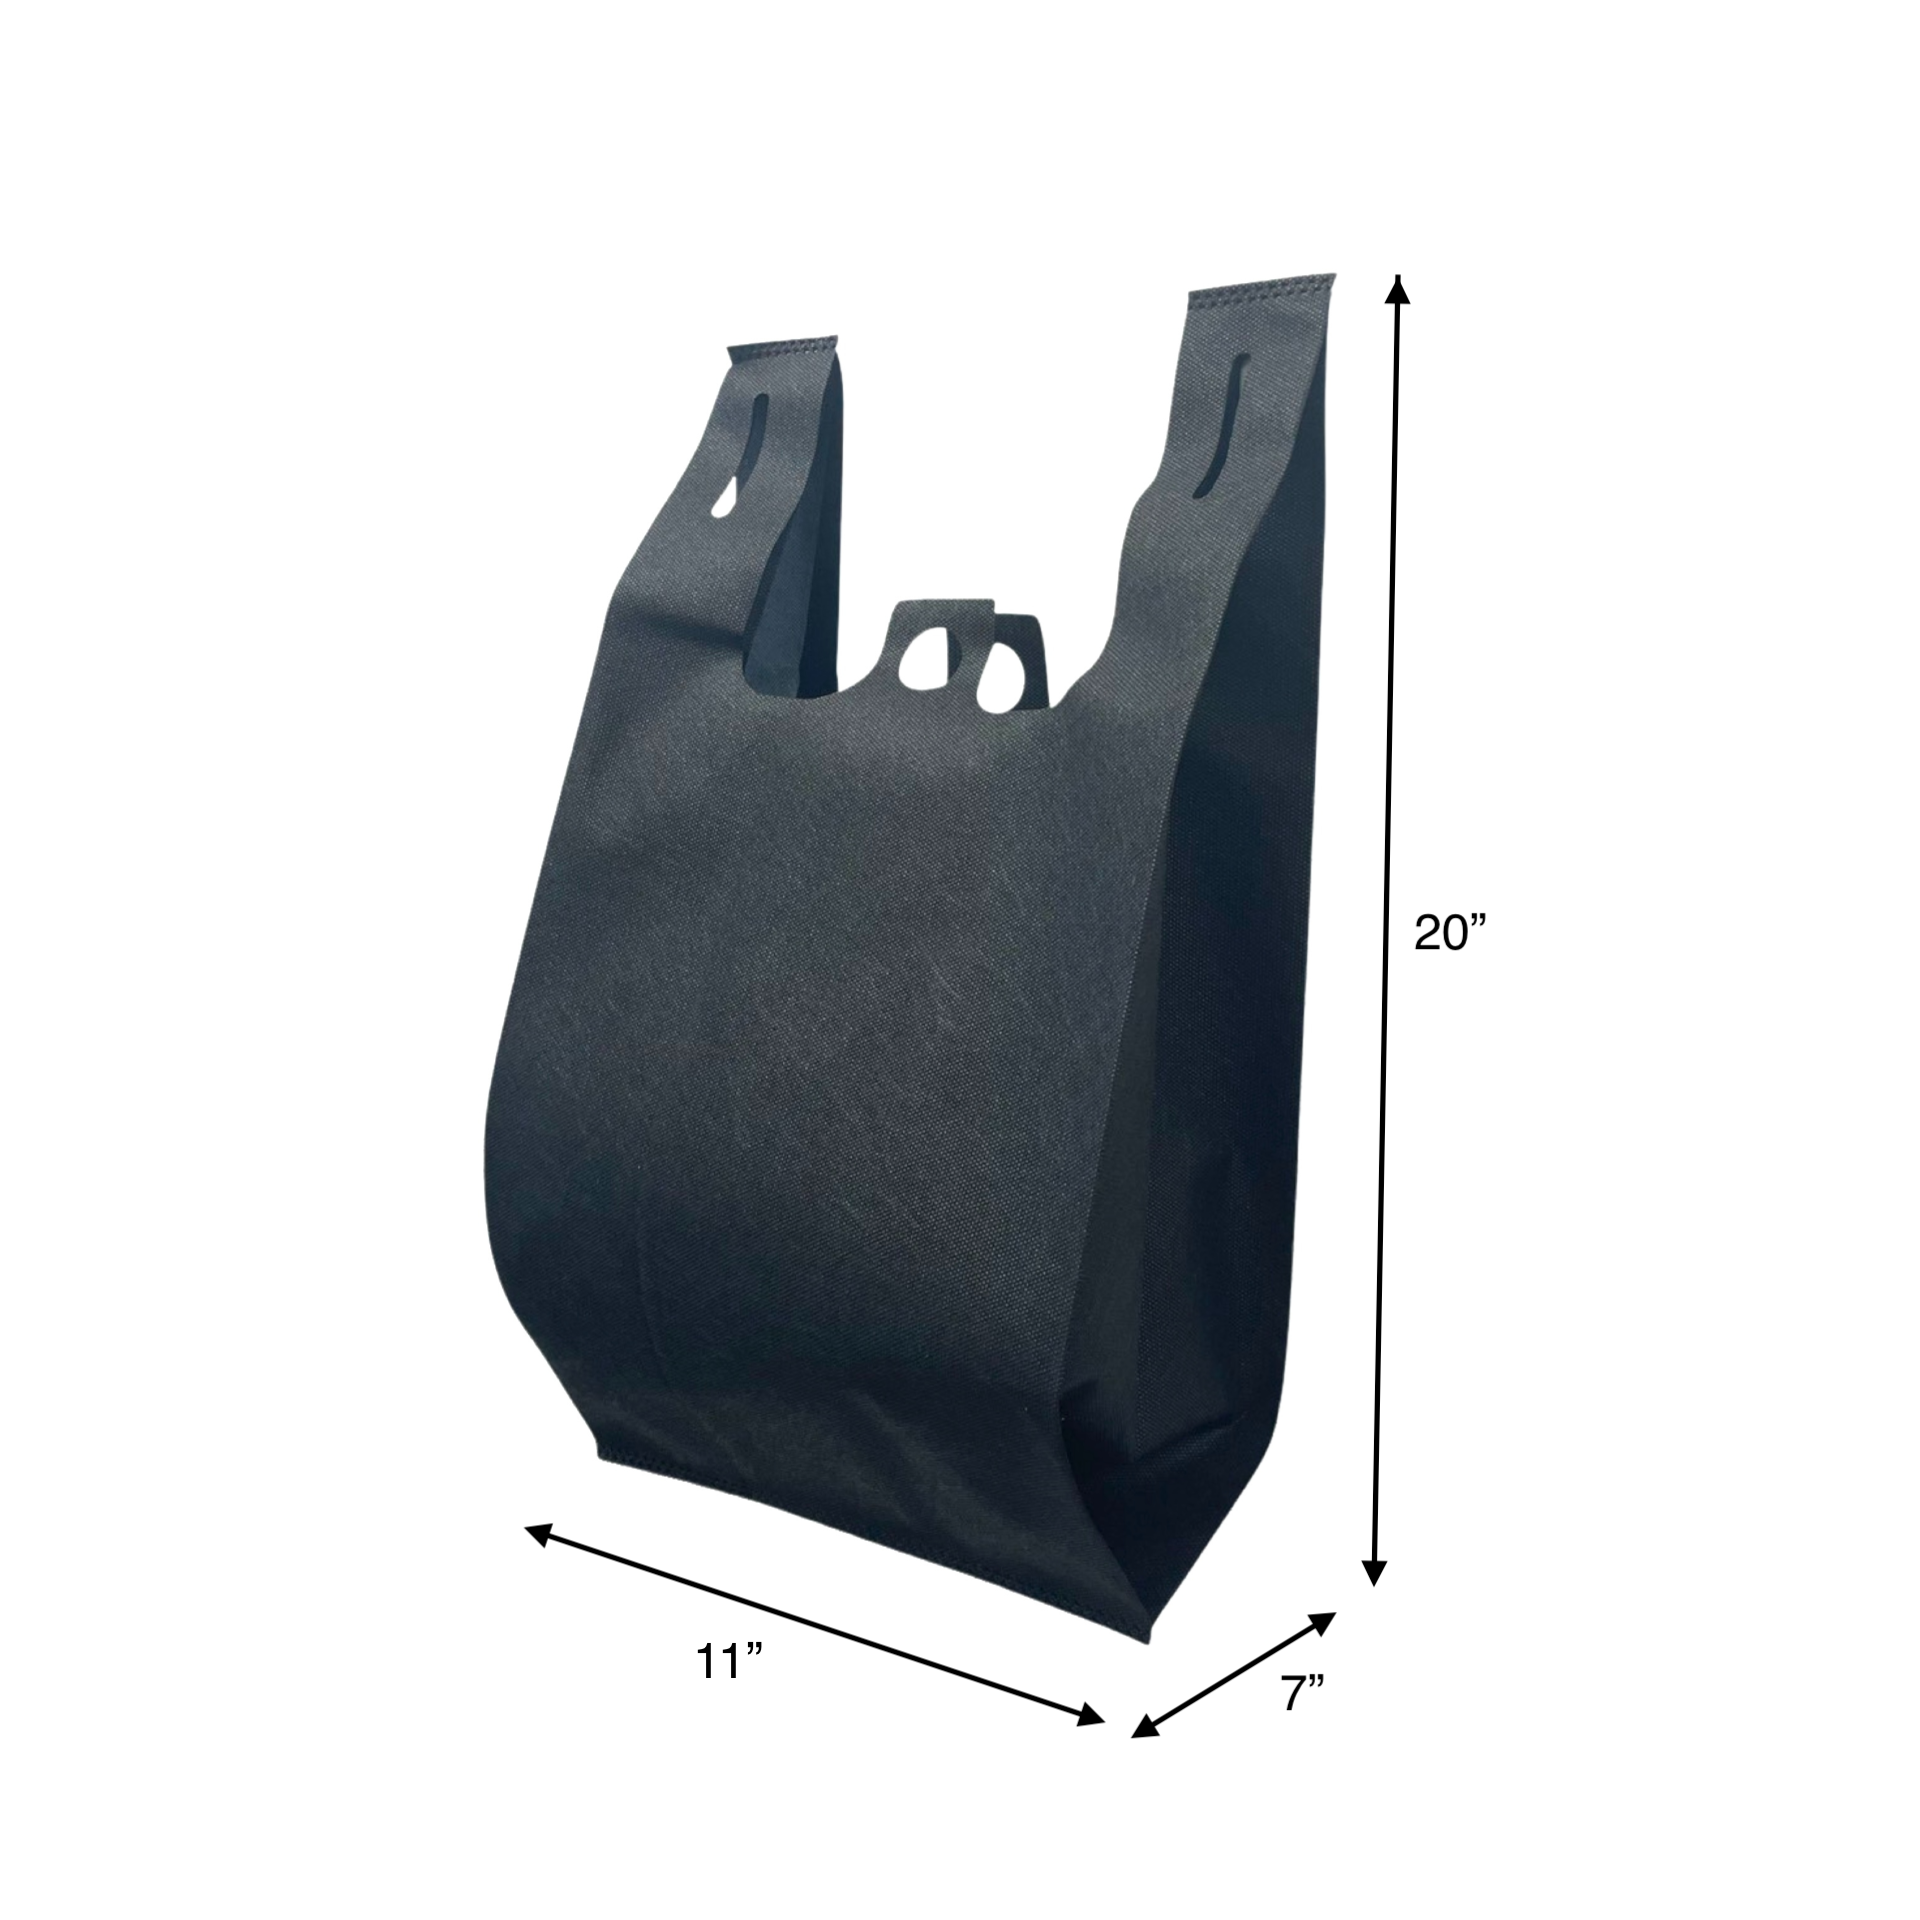 200pcs, T-Shirt Bag, 11x7x20 inches, Black Non-Woven Reusable Shopping Bags, with Pinch Bottom